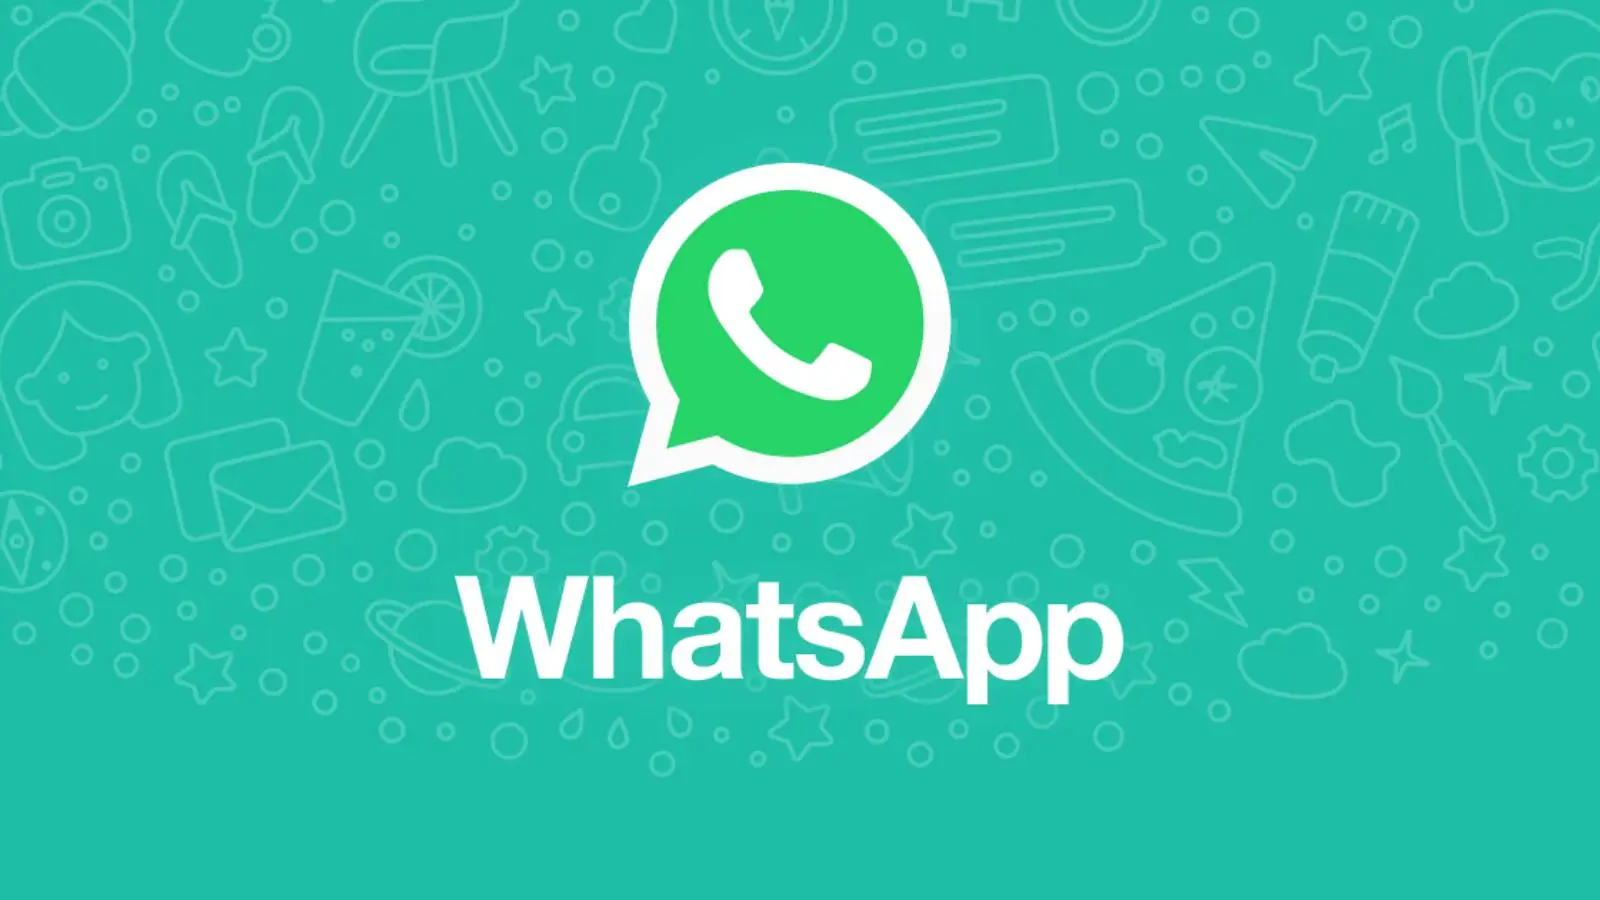 WhatsApp iPhone Android Noua Schimbare SECRETA Prezentata